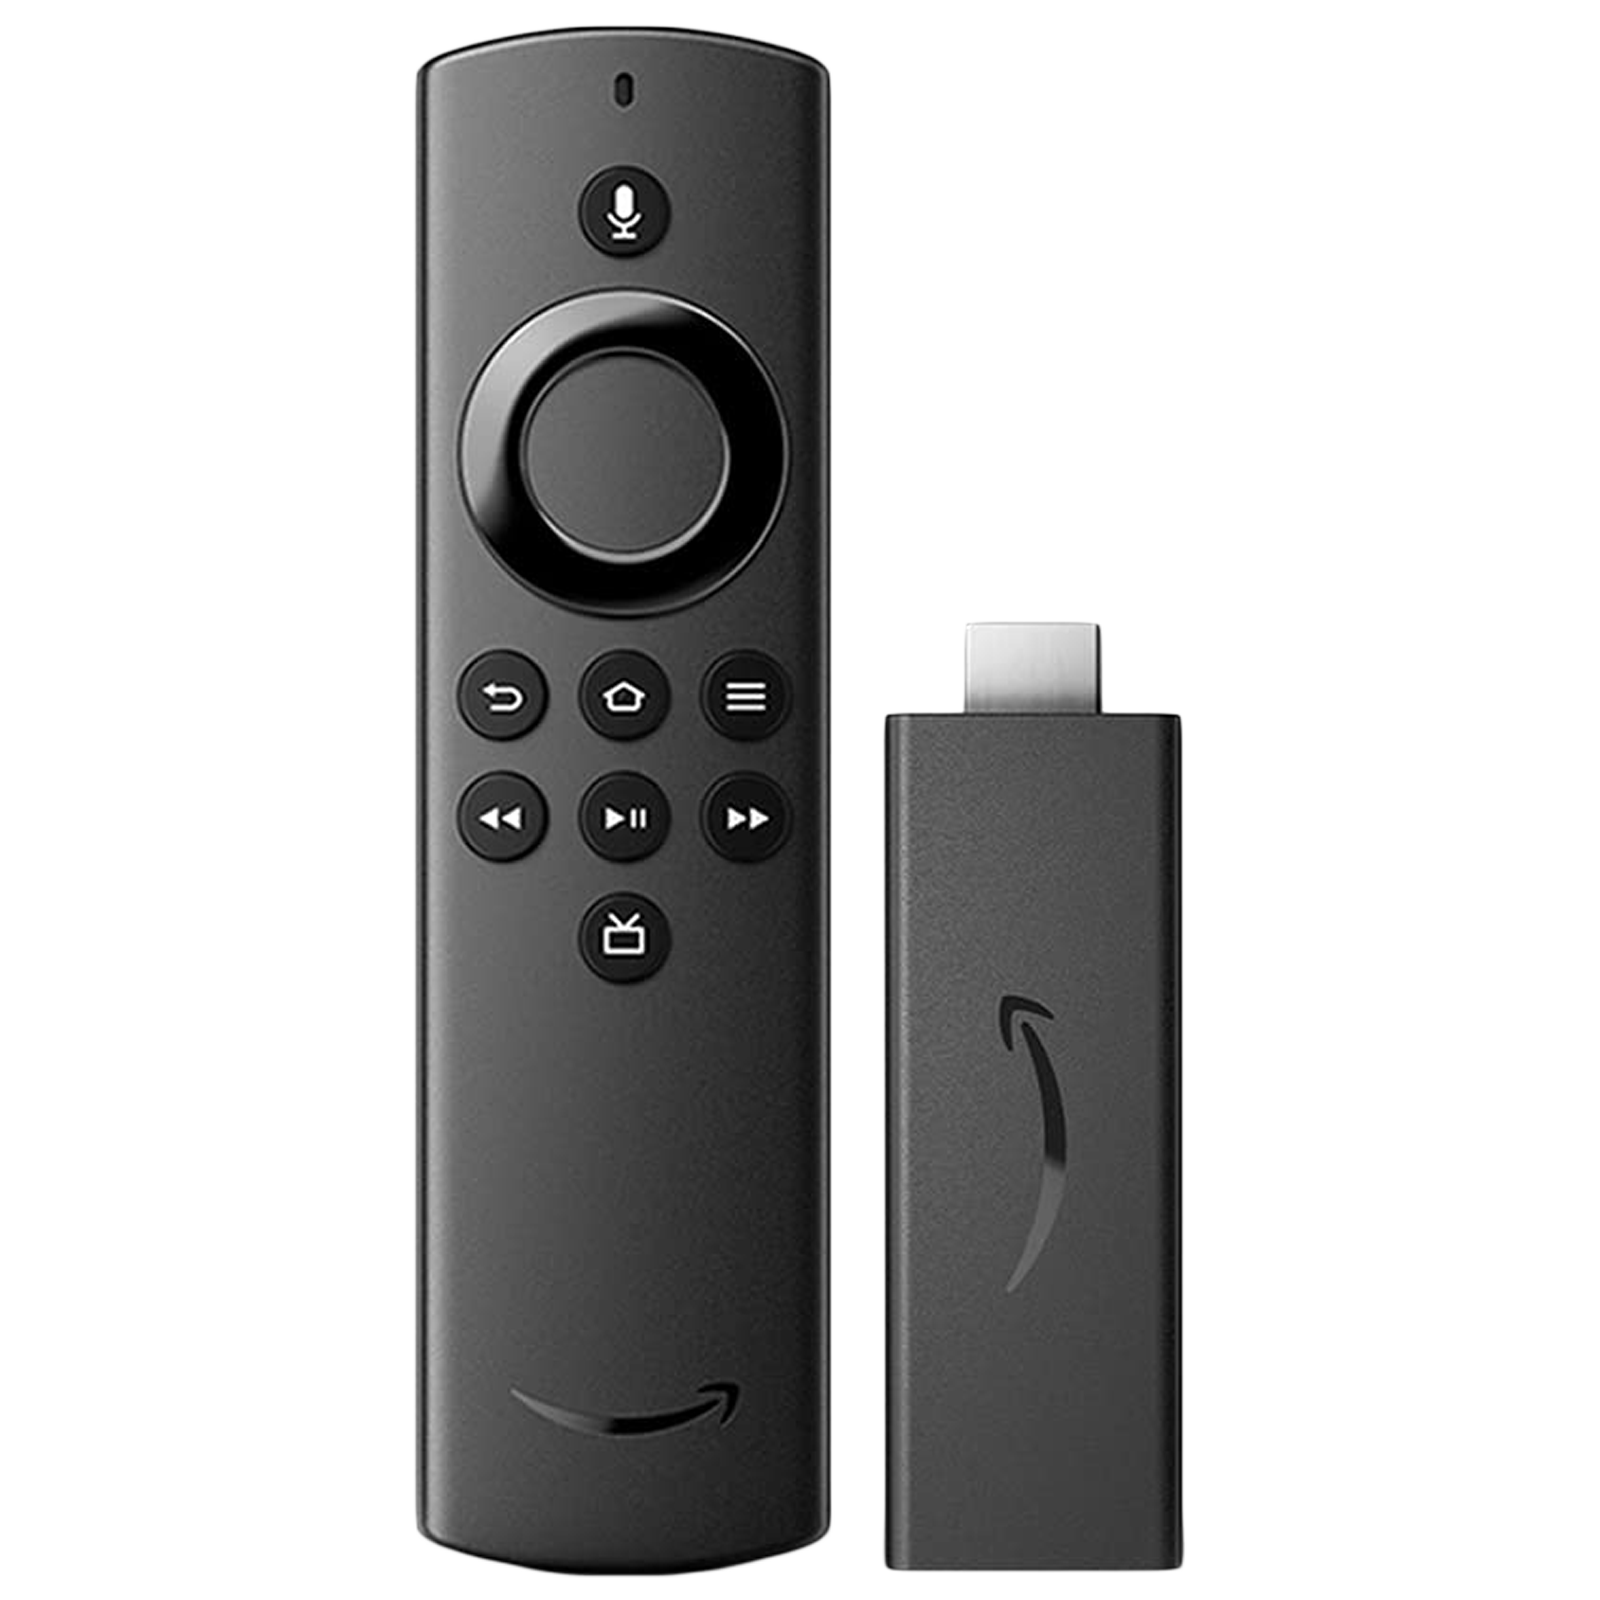 Amazon Fire TV Stick Lite with Alexa Voice Remote Lite (Stream HD Quality Video, B08R6NFZ6R, Black)_1